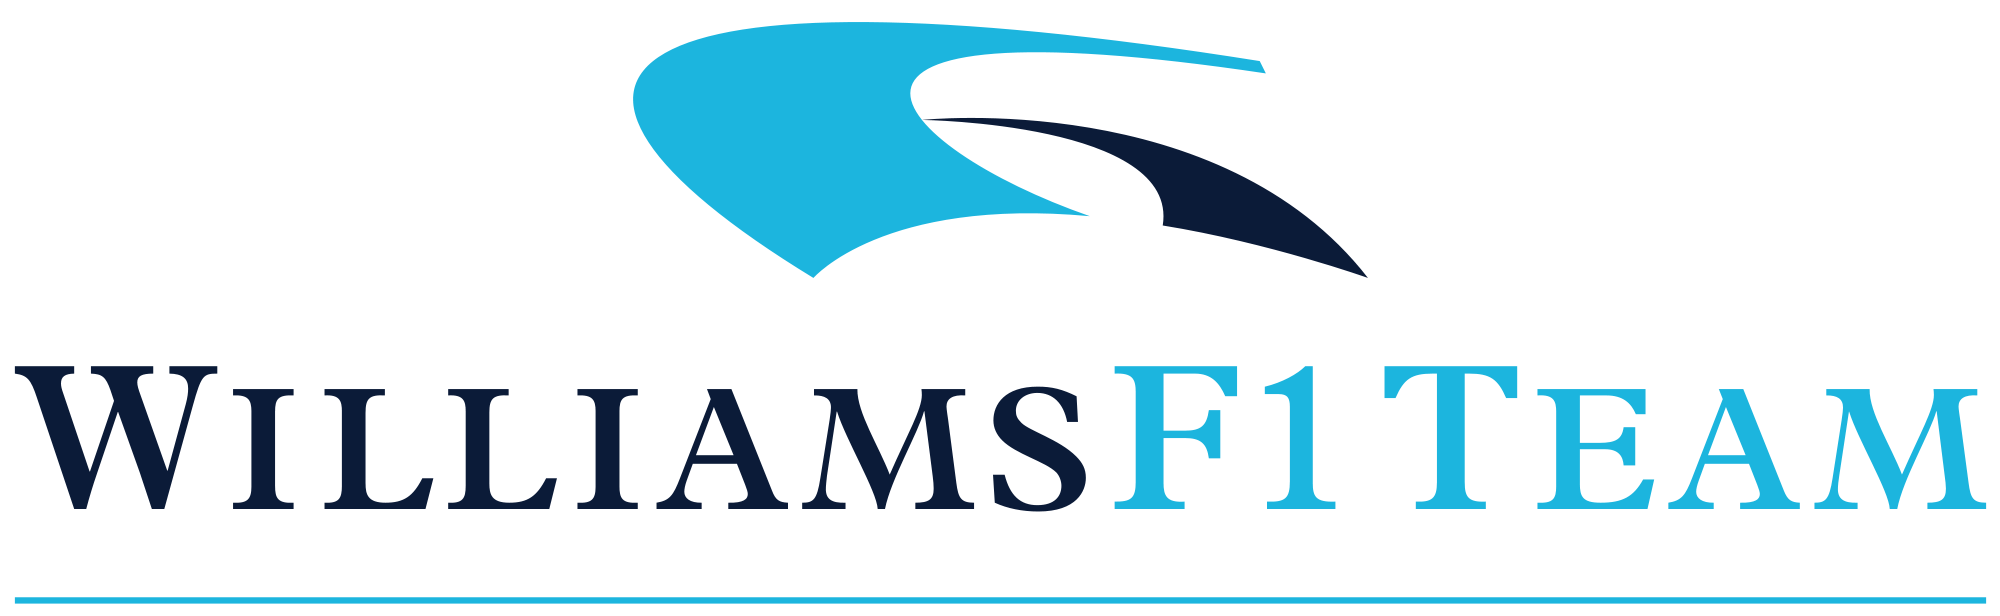 Williams F1 Logo - Williams Racing